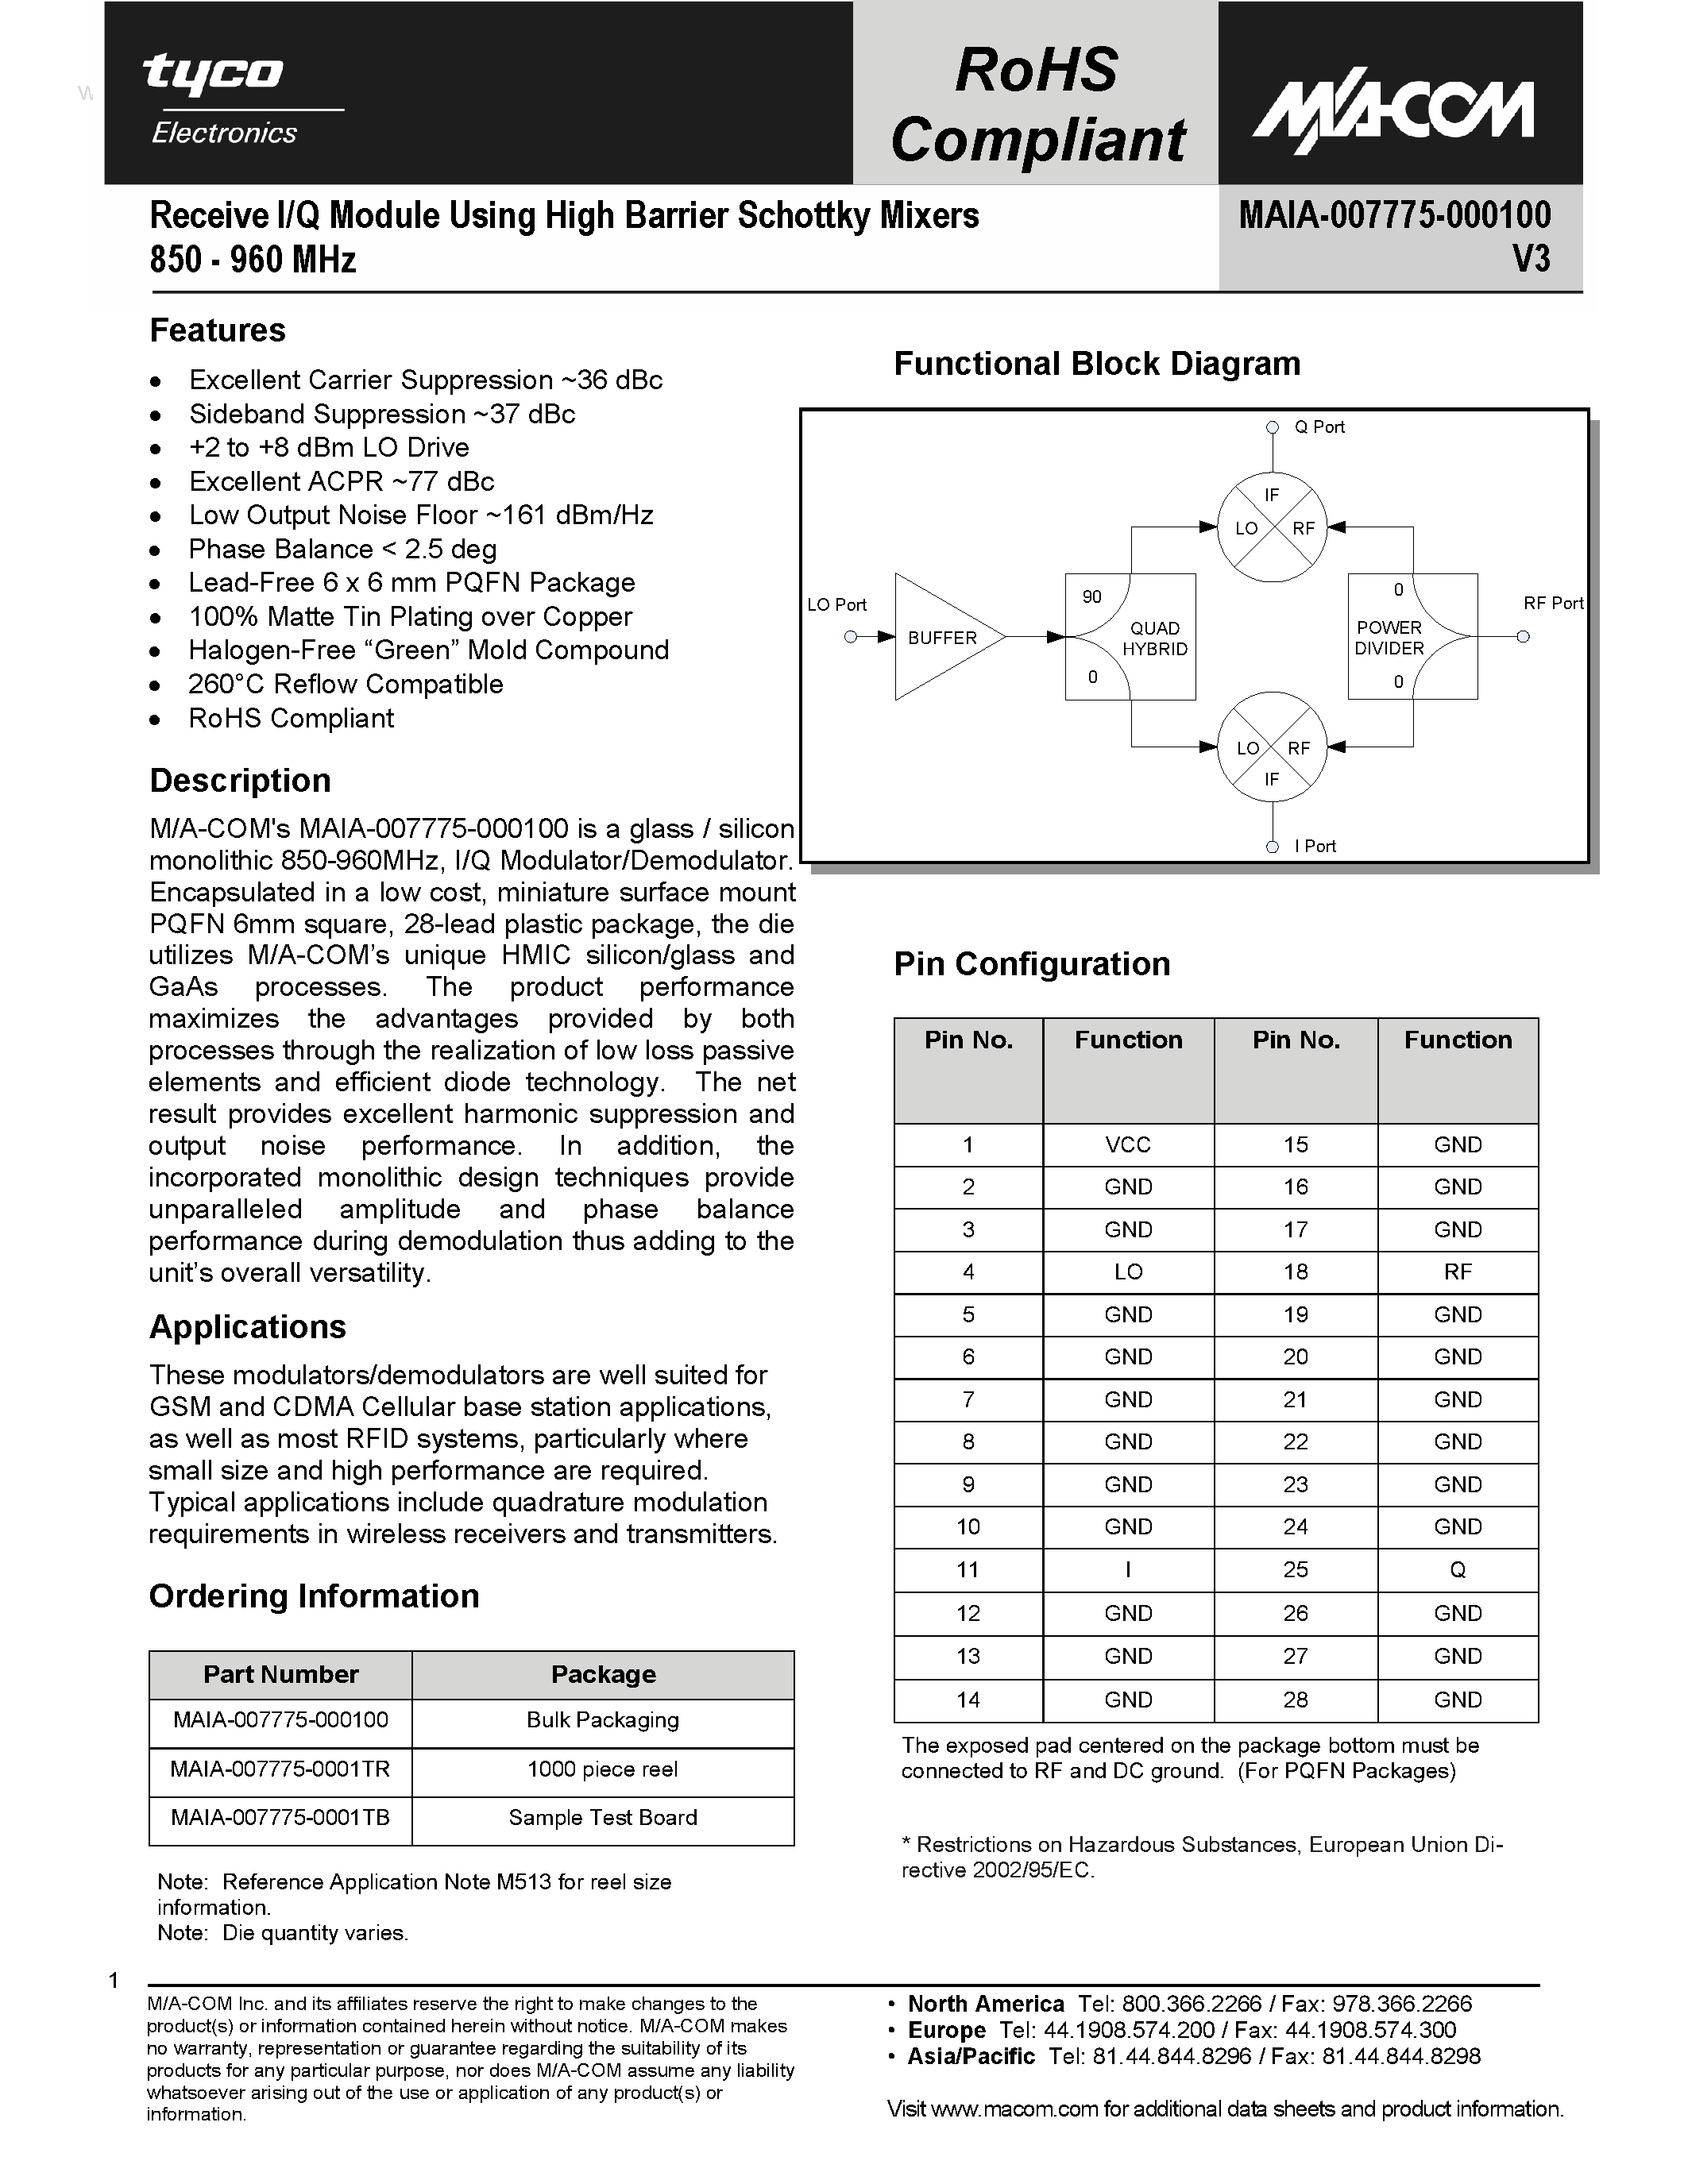 Datasheet MAIA-007775-000100 - Receive I/Q Module Using High Barrier Schottky Mixers page 1